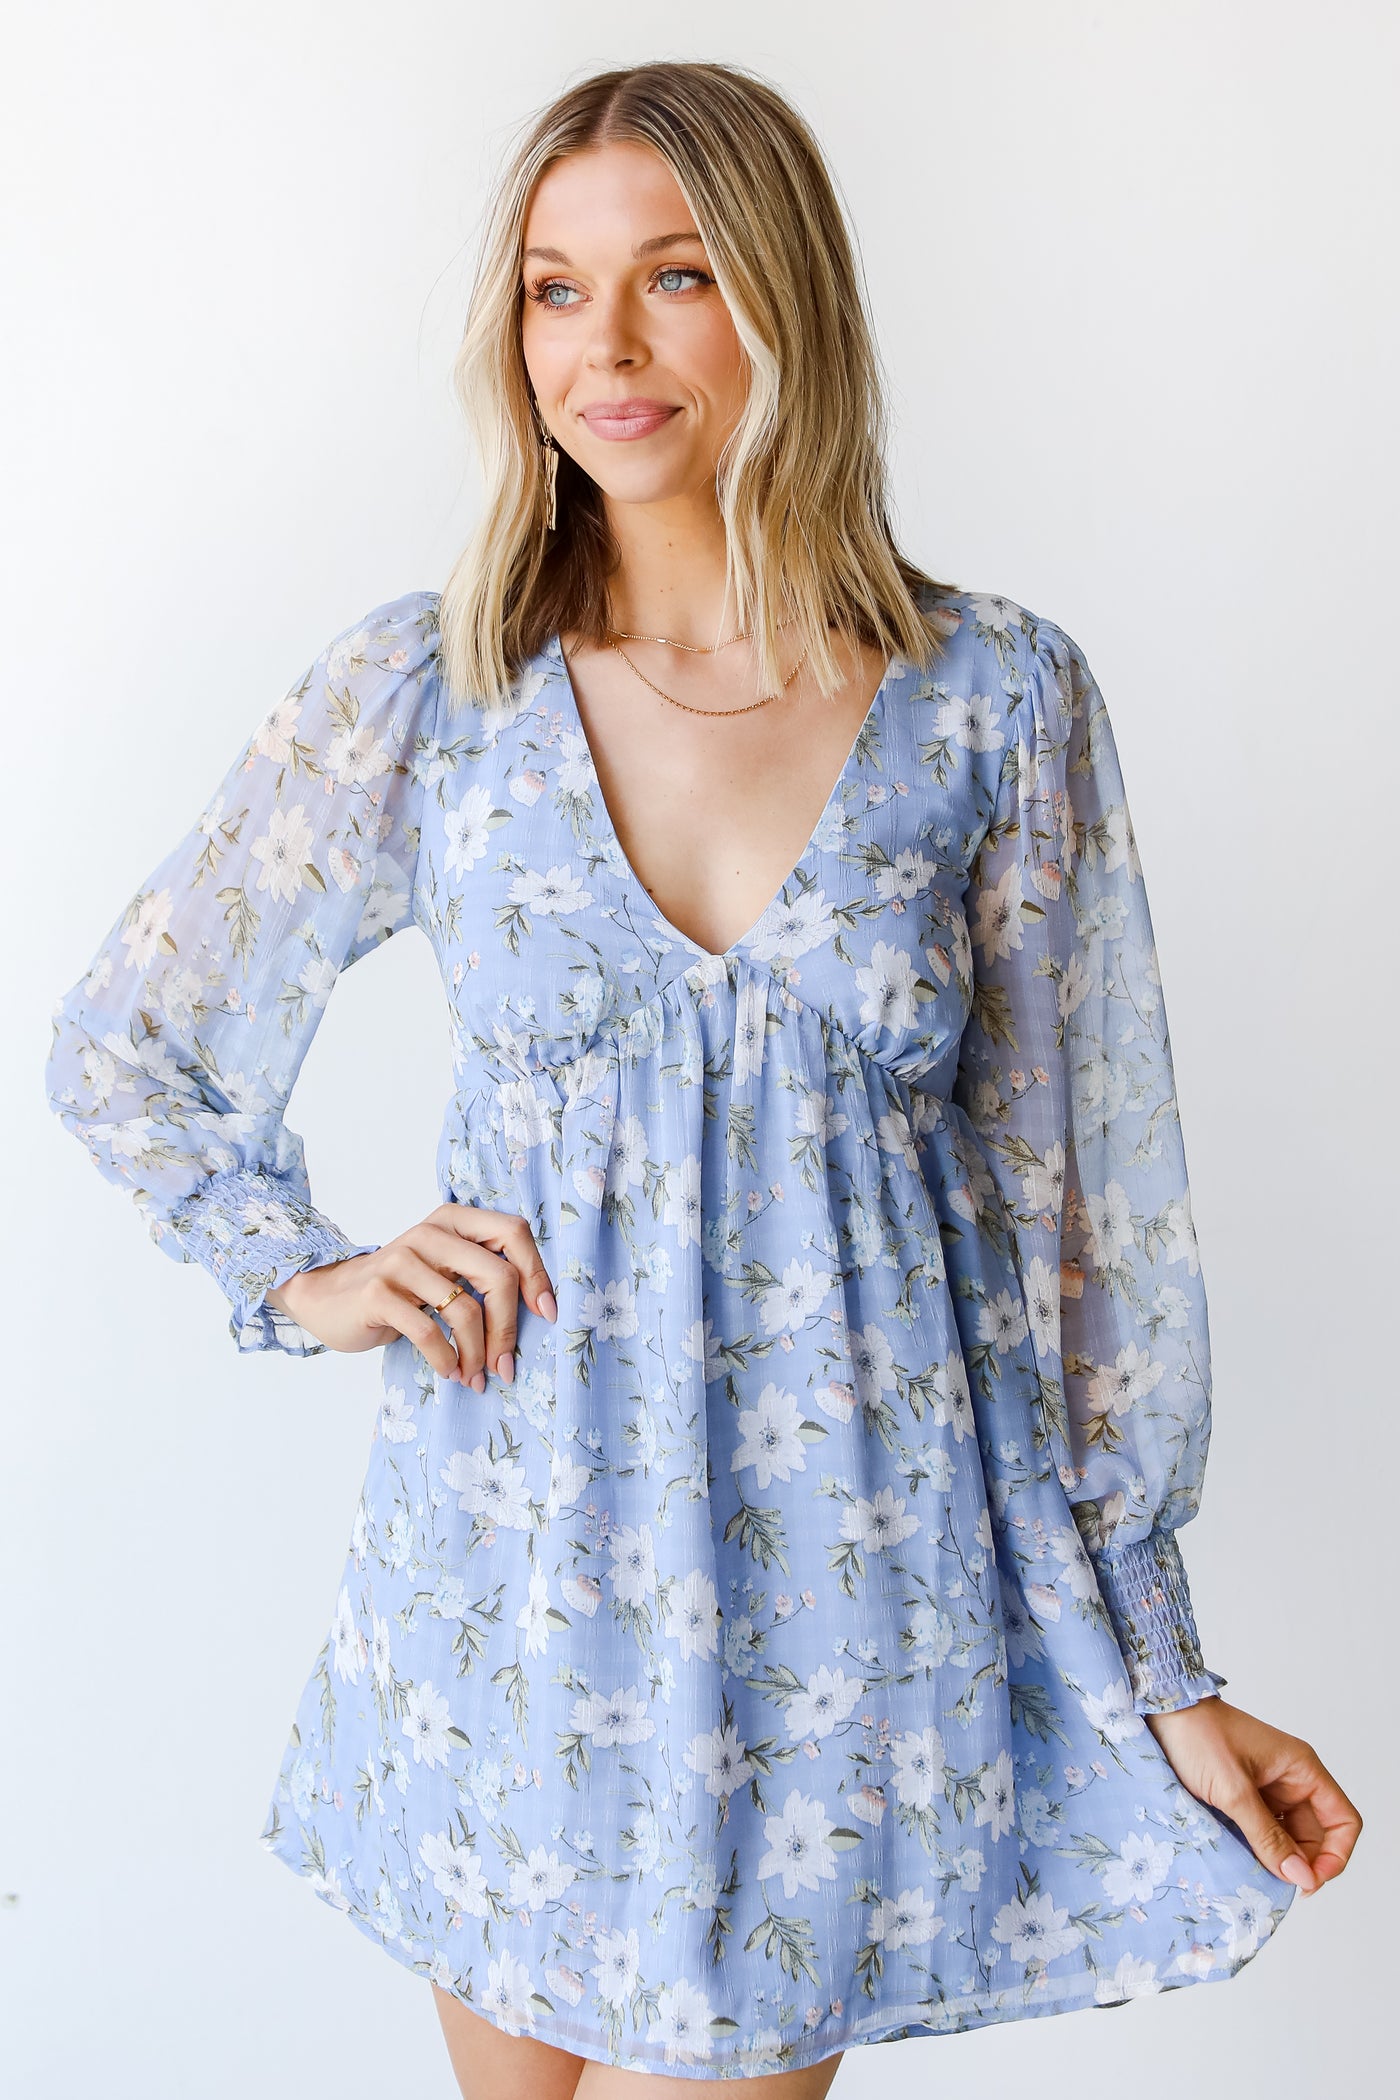 model wearing a blue Floral Mini Dress